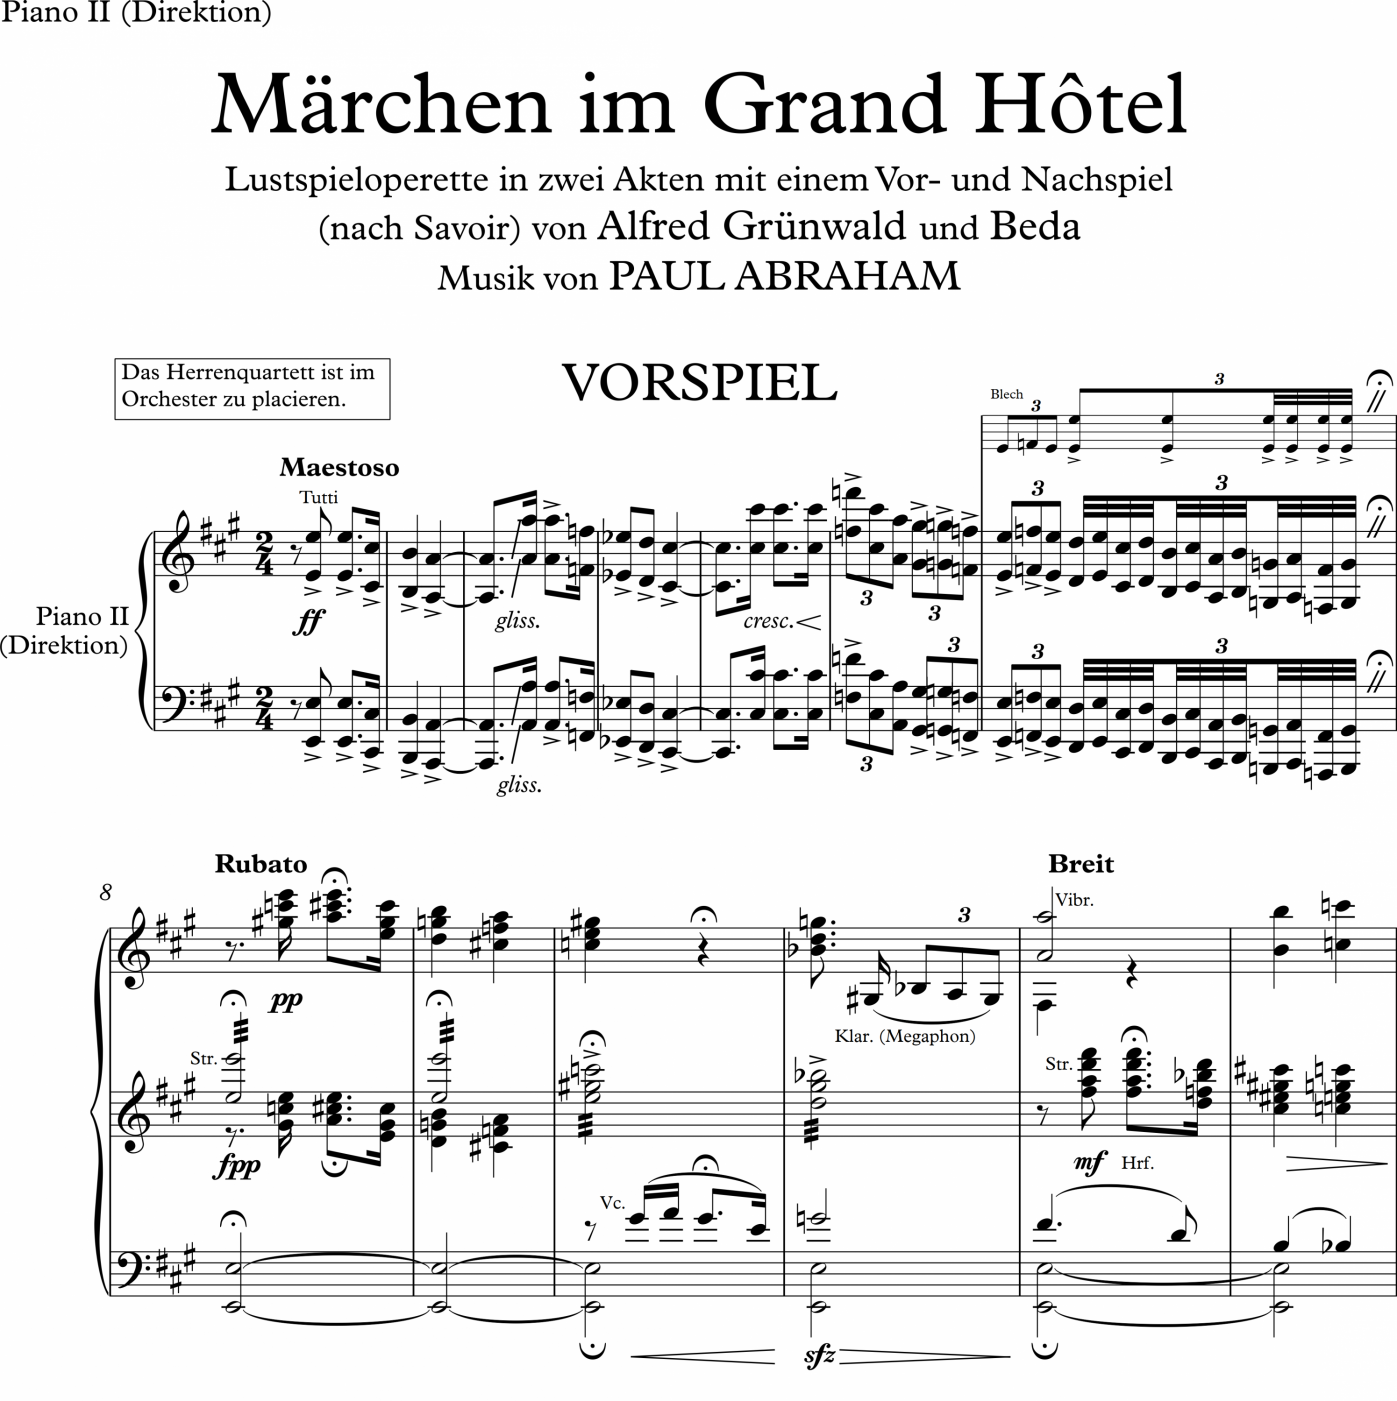 Märchen 1 - Piano II (Direktion)_0001.png